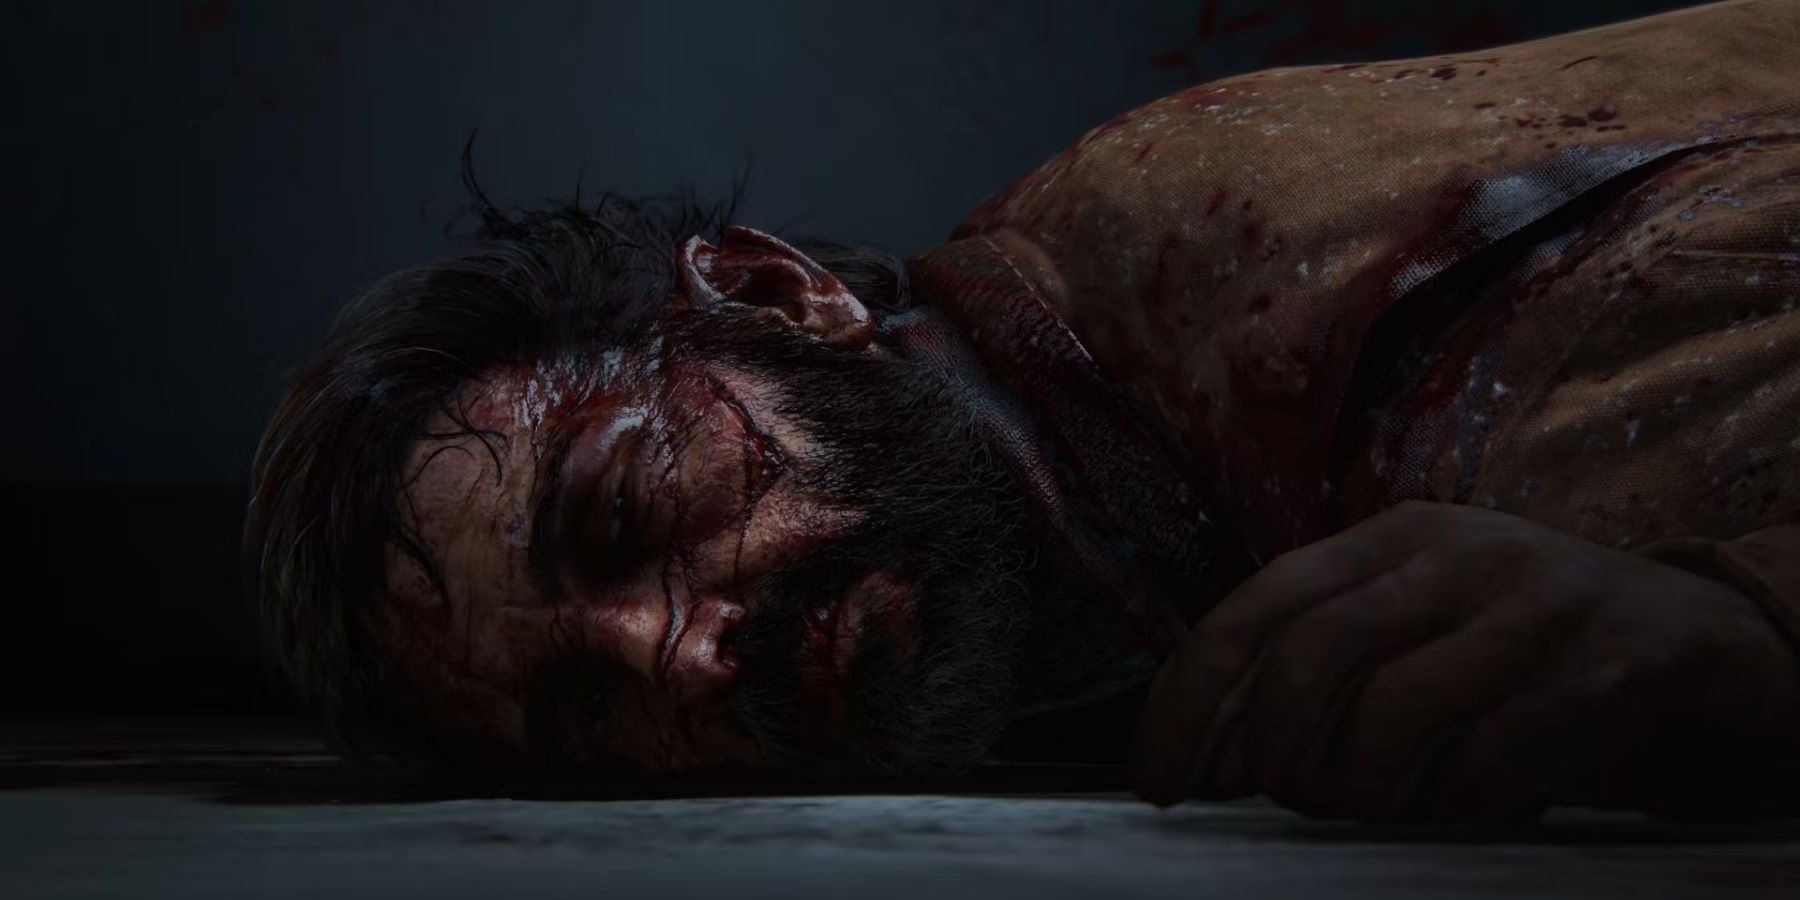 Joel lies dead in The Last of Us Part II